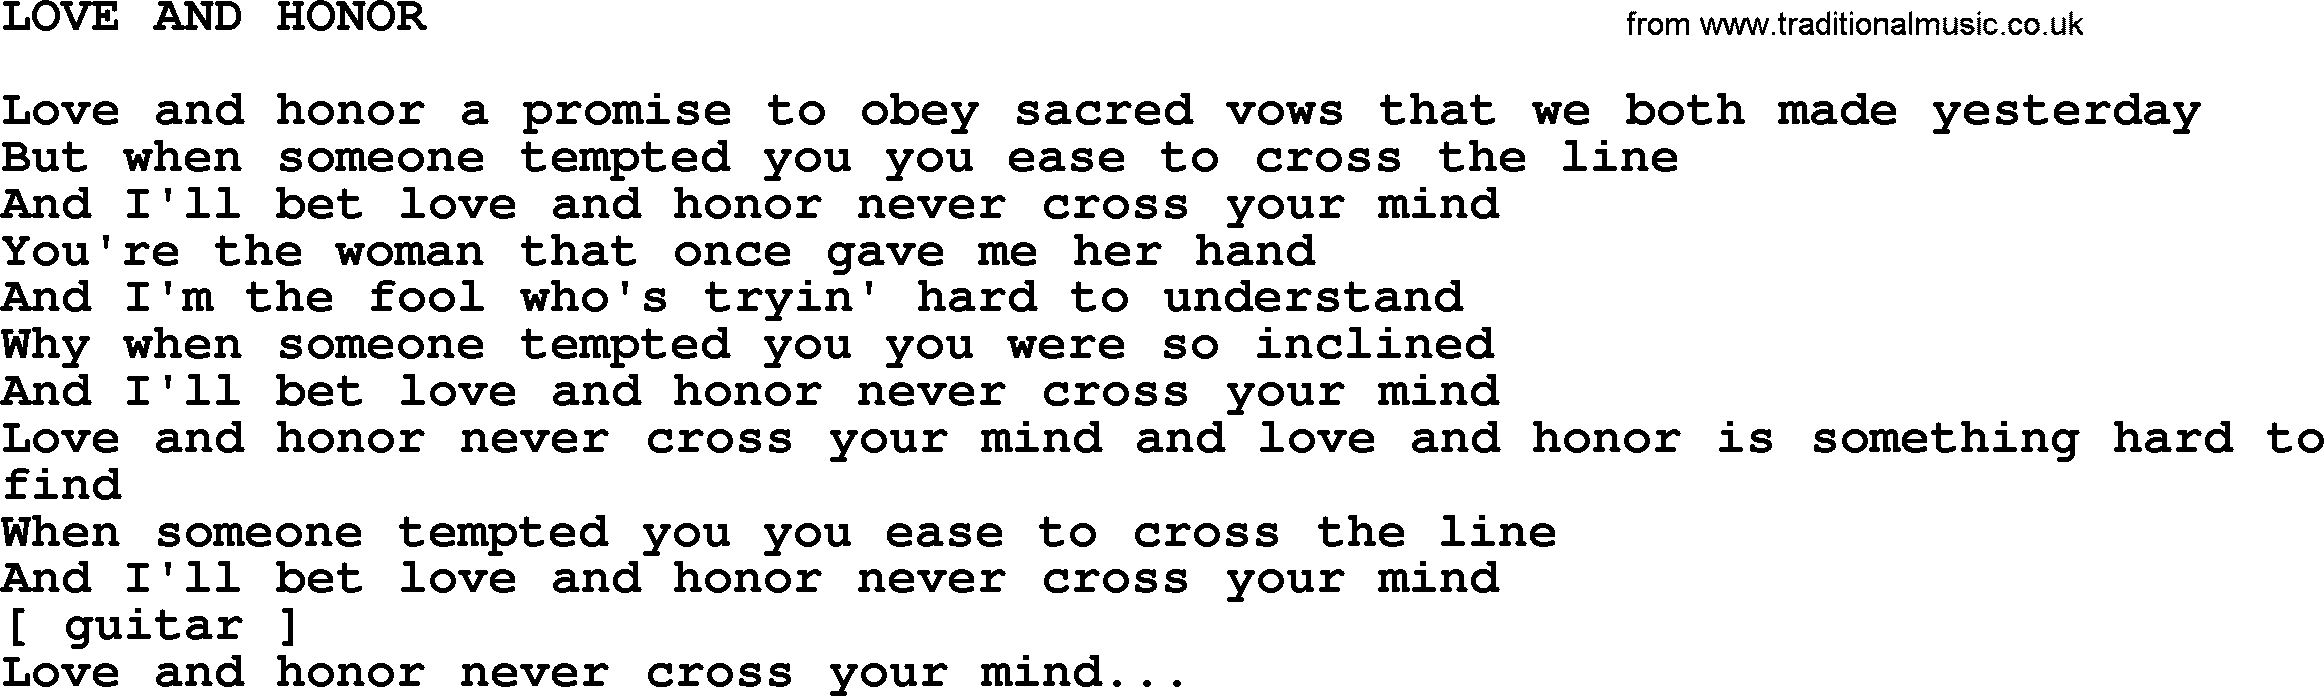 Merle Haggard song: Love And Honor, lyrics.